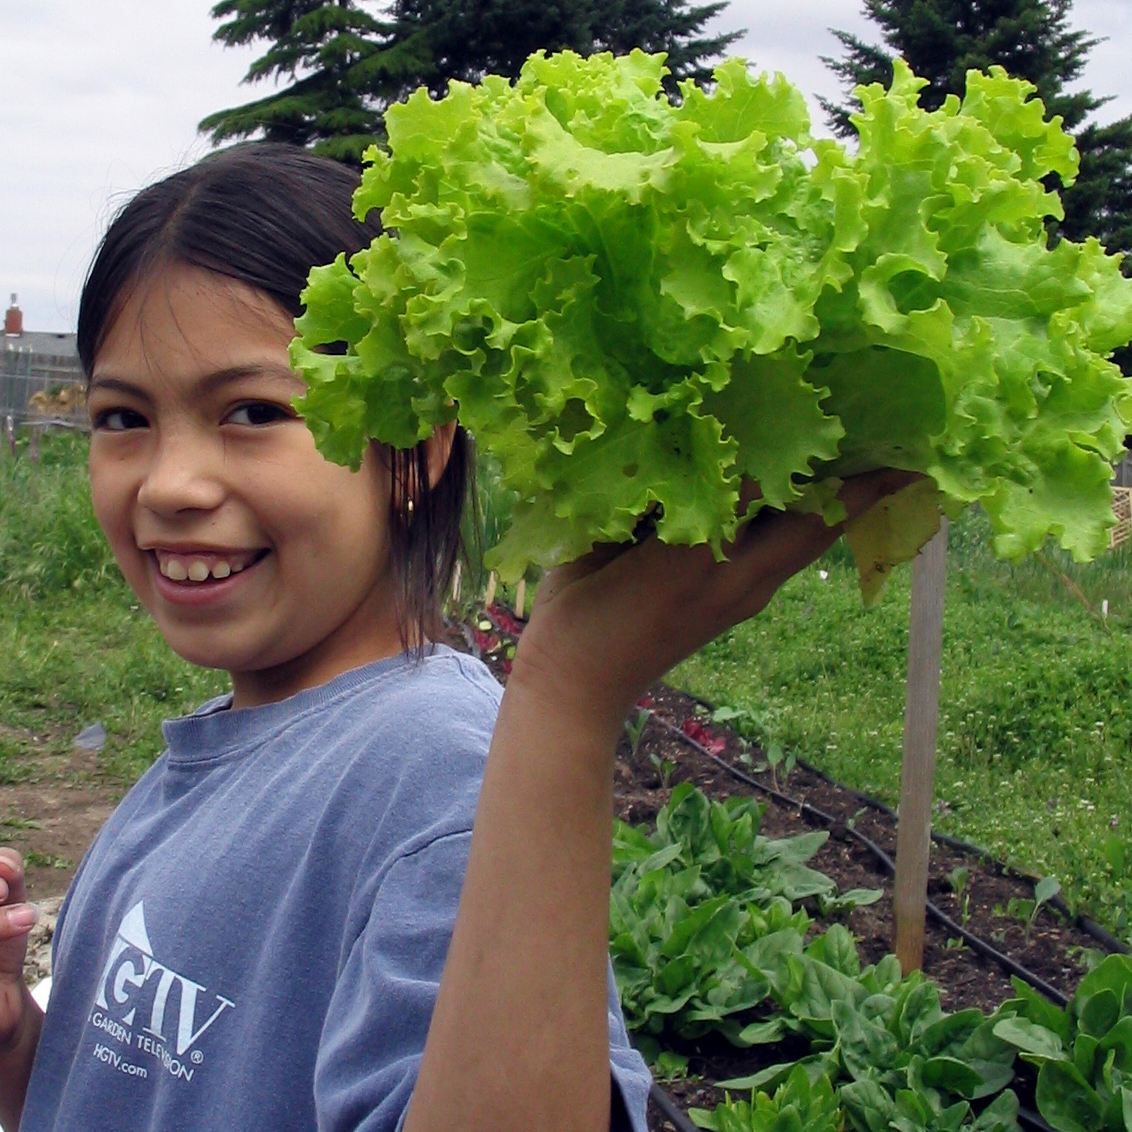 Lettuce harvested at Marra Farm